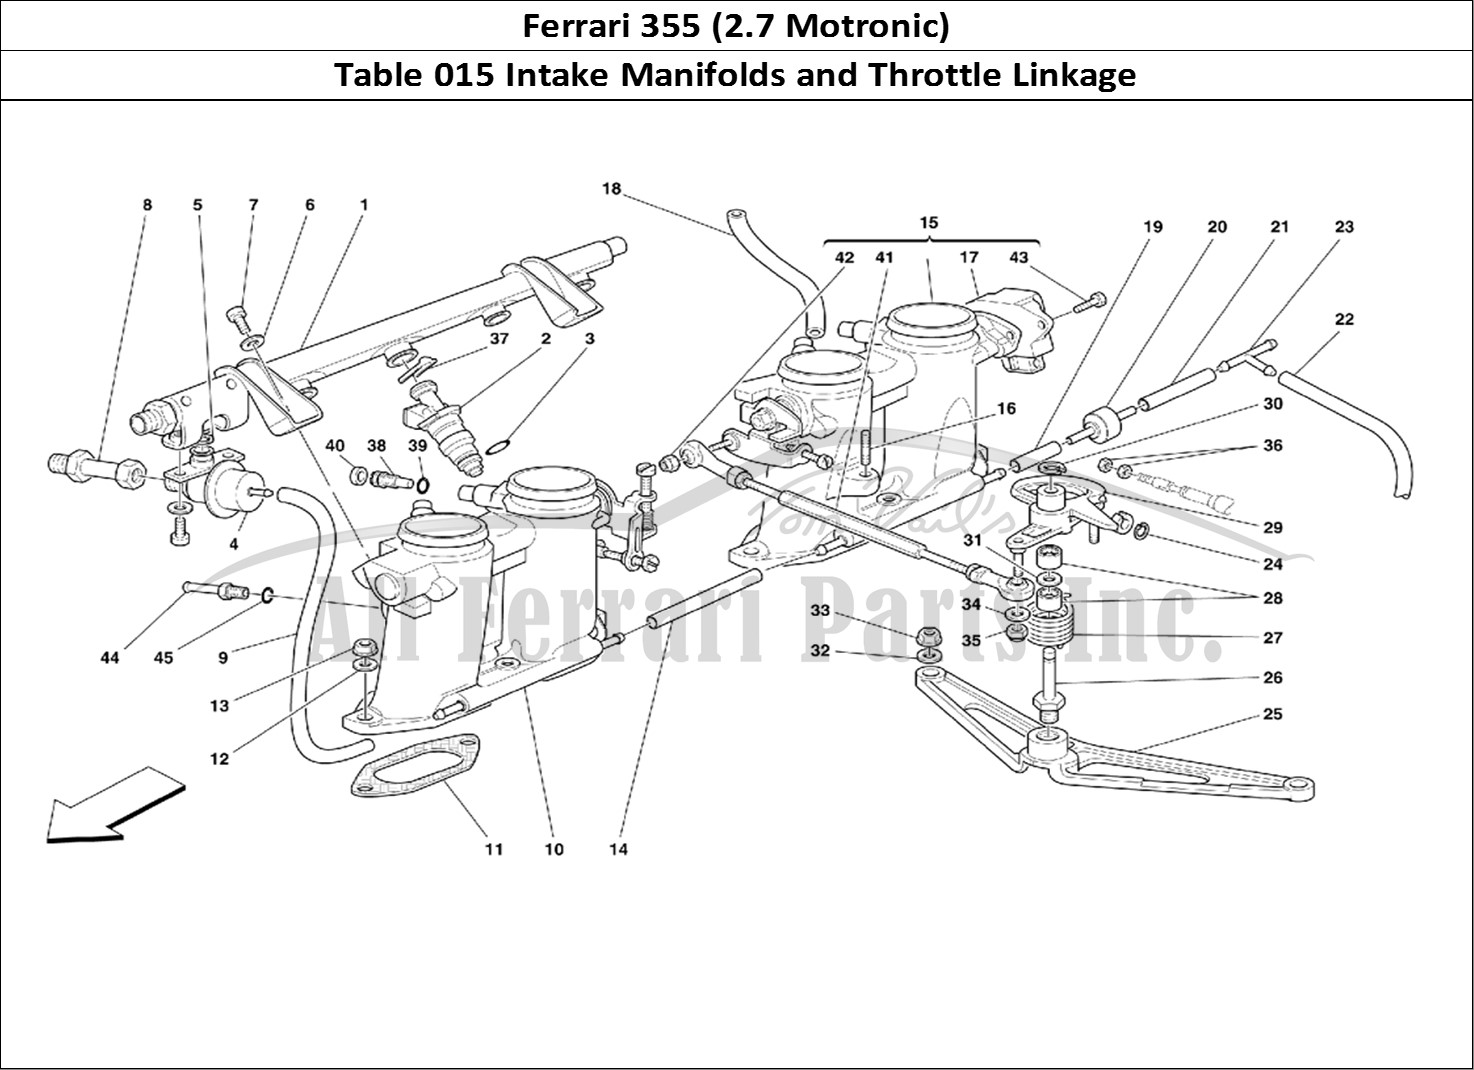 Ferrari Parts Ferrari 355 (2.7 Motronic) Page 015 Throttle Holders and Cont